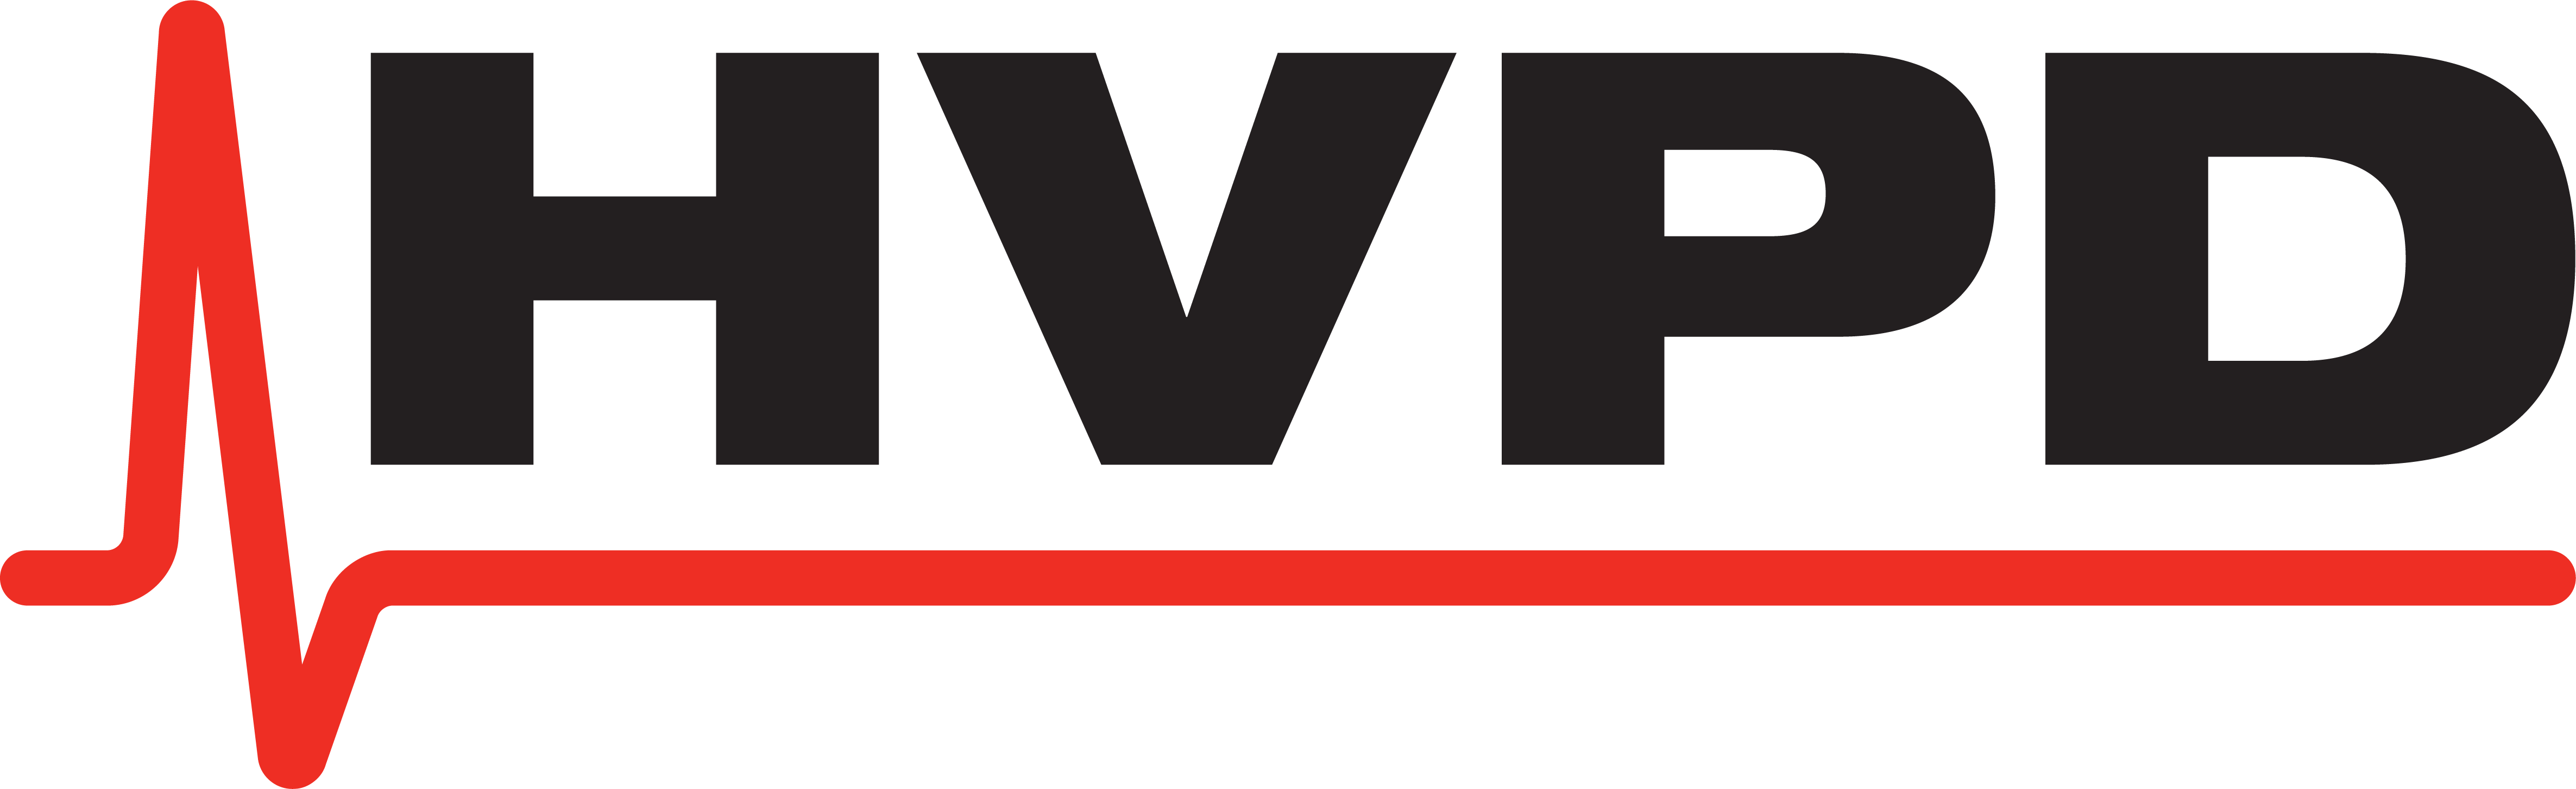 HVPD logo